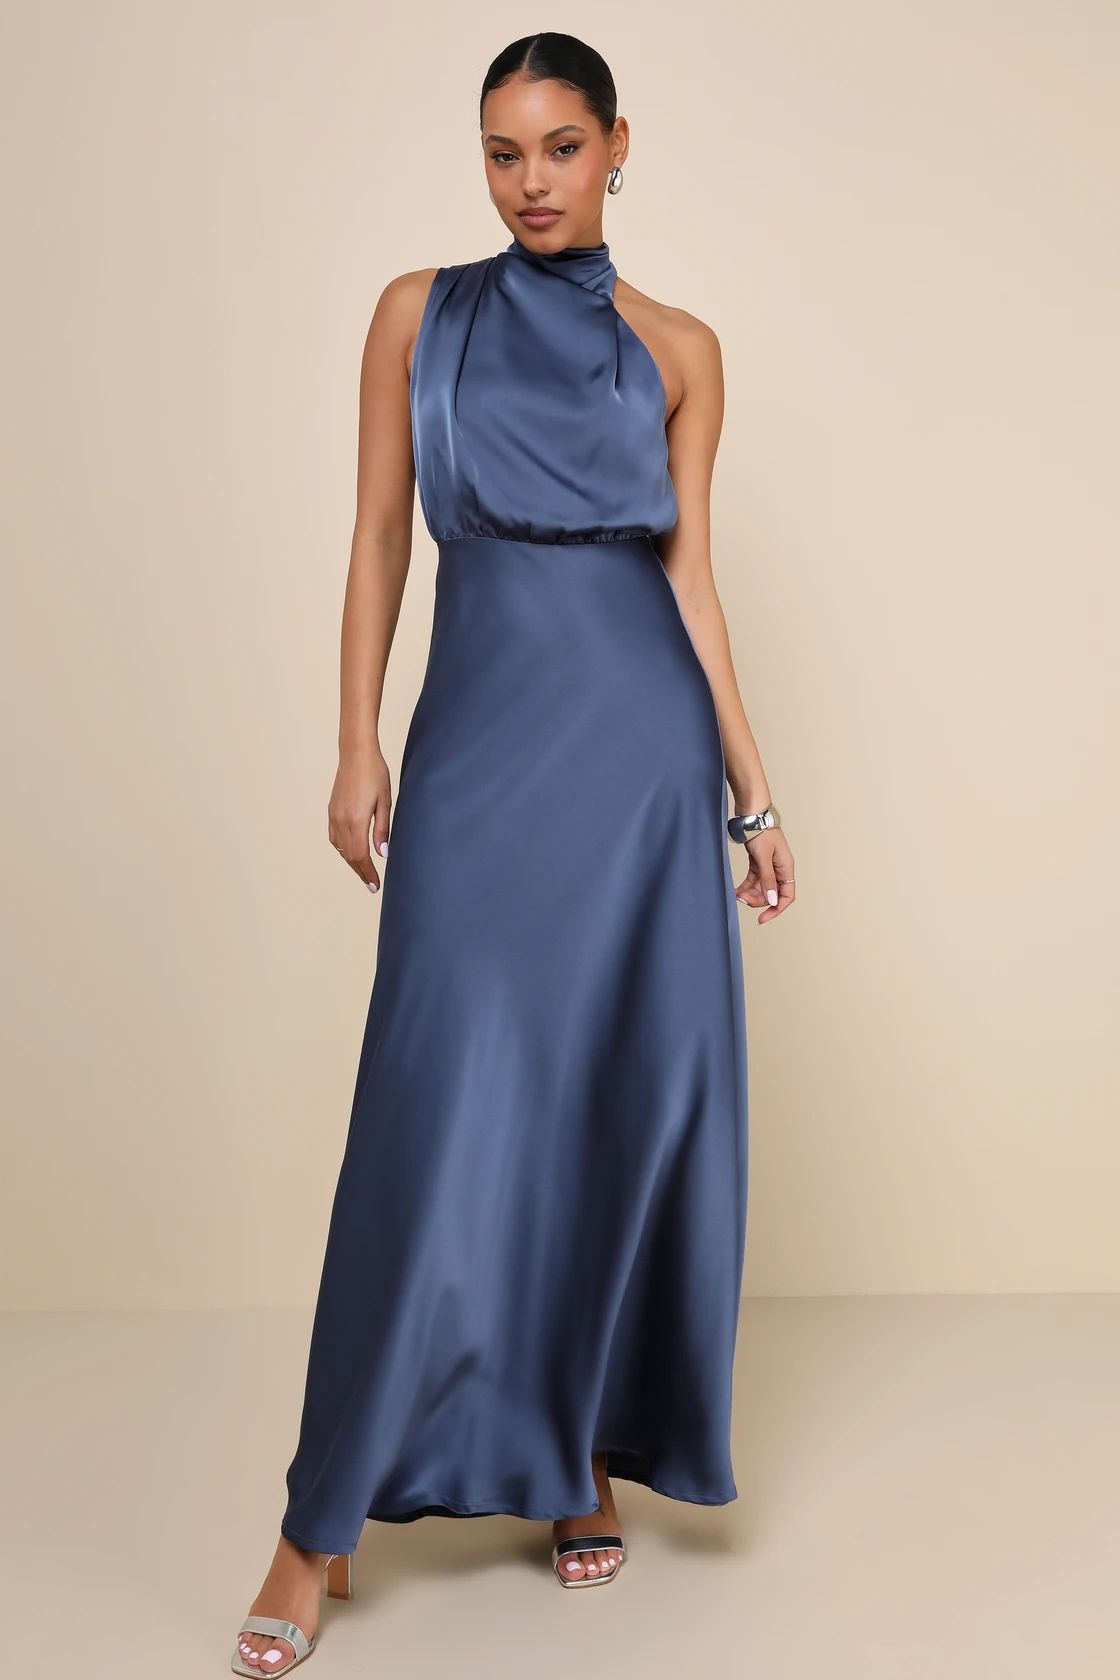 Distinctive Charm Slate Blue Satin Asymmetrical Maxi Dress | Lulus